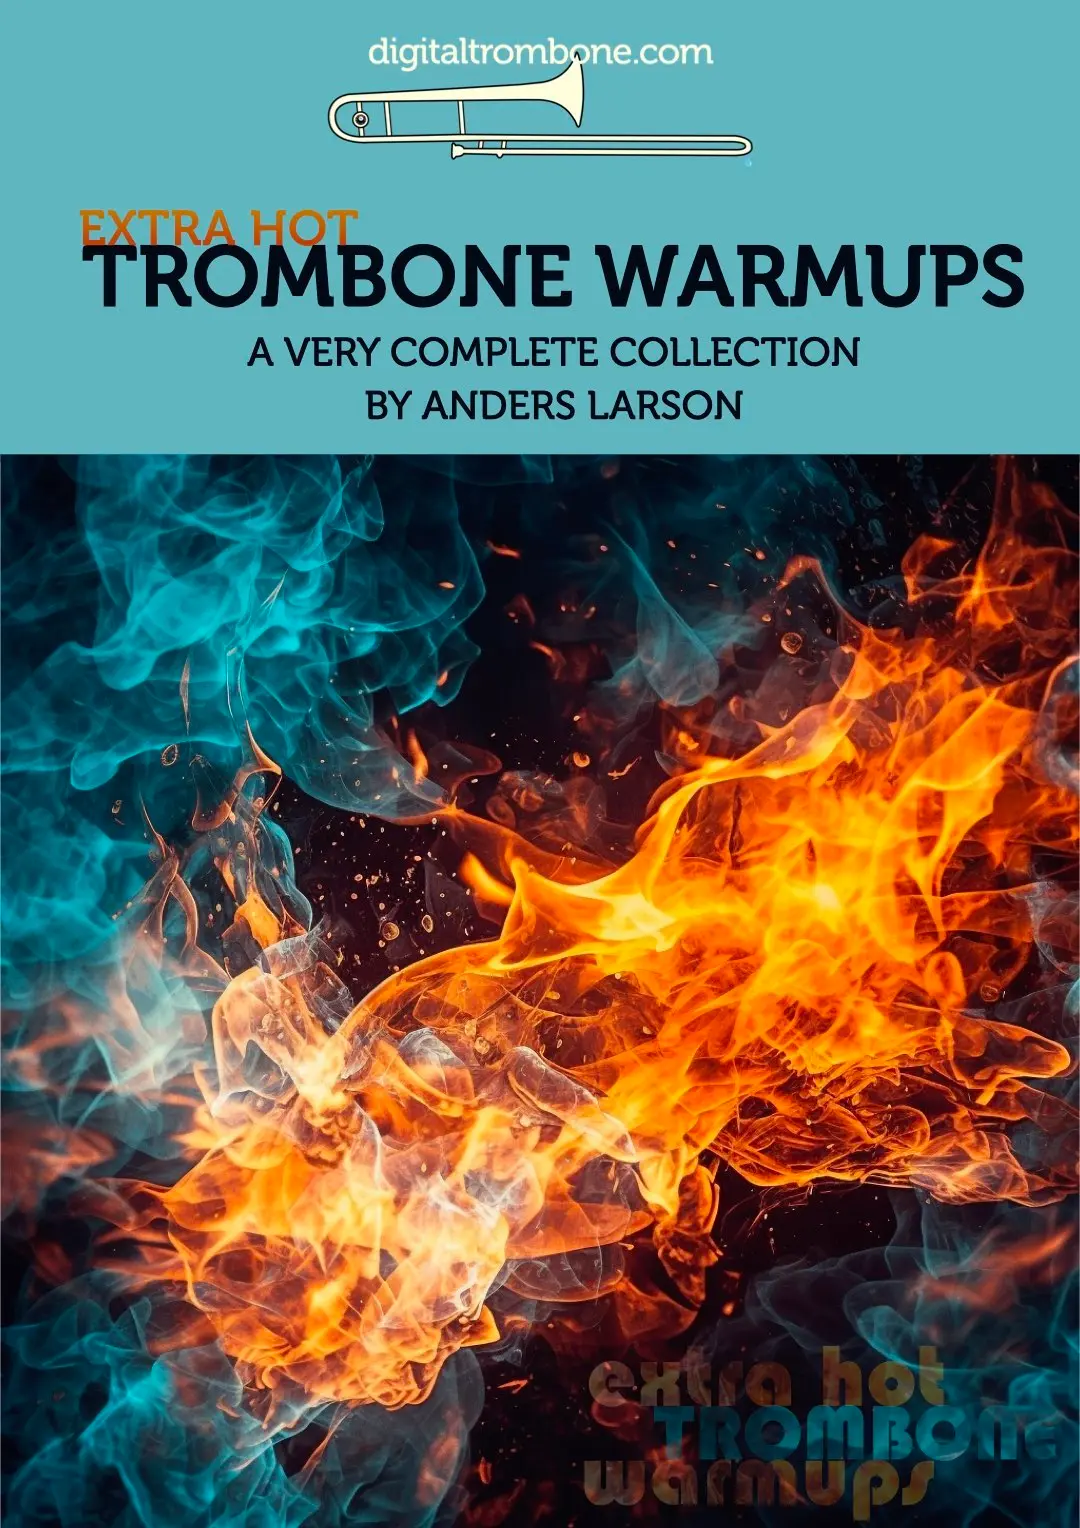 Extra hot trombone warmups